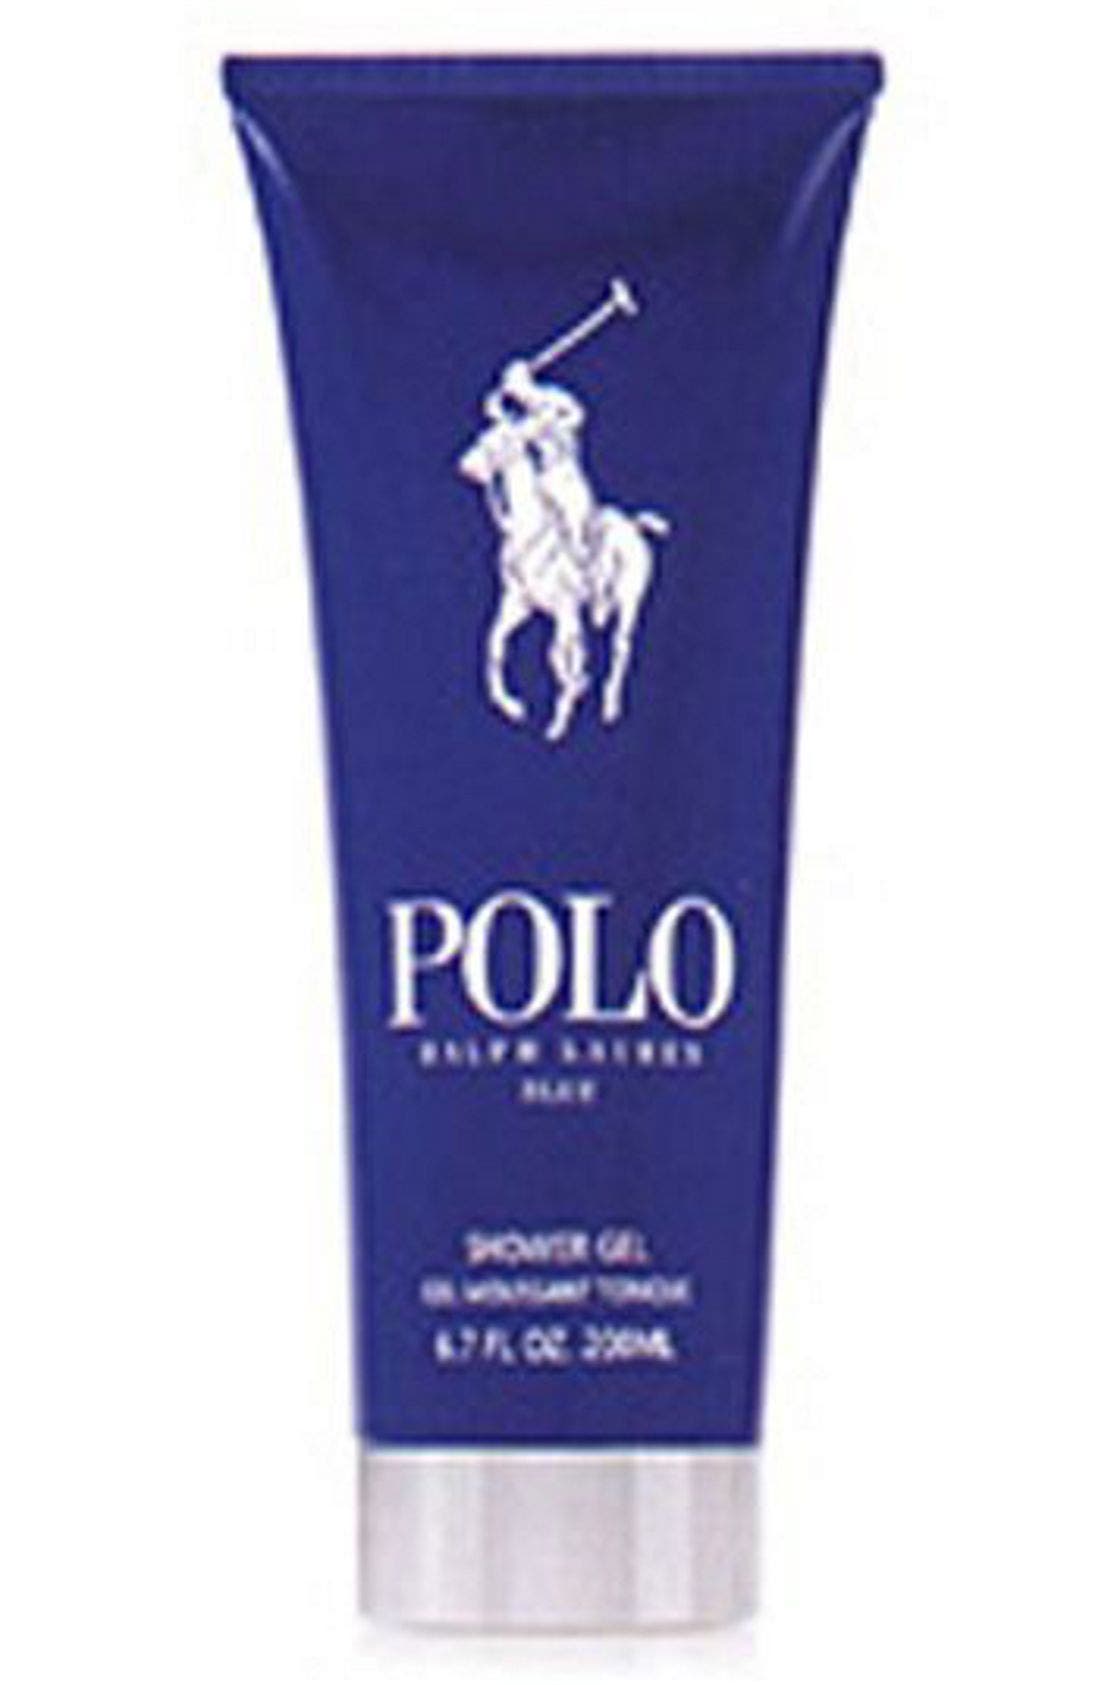 polo ralph lauren blue vitamin enriched shower gel